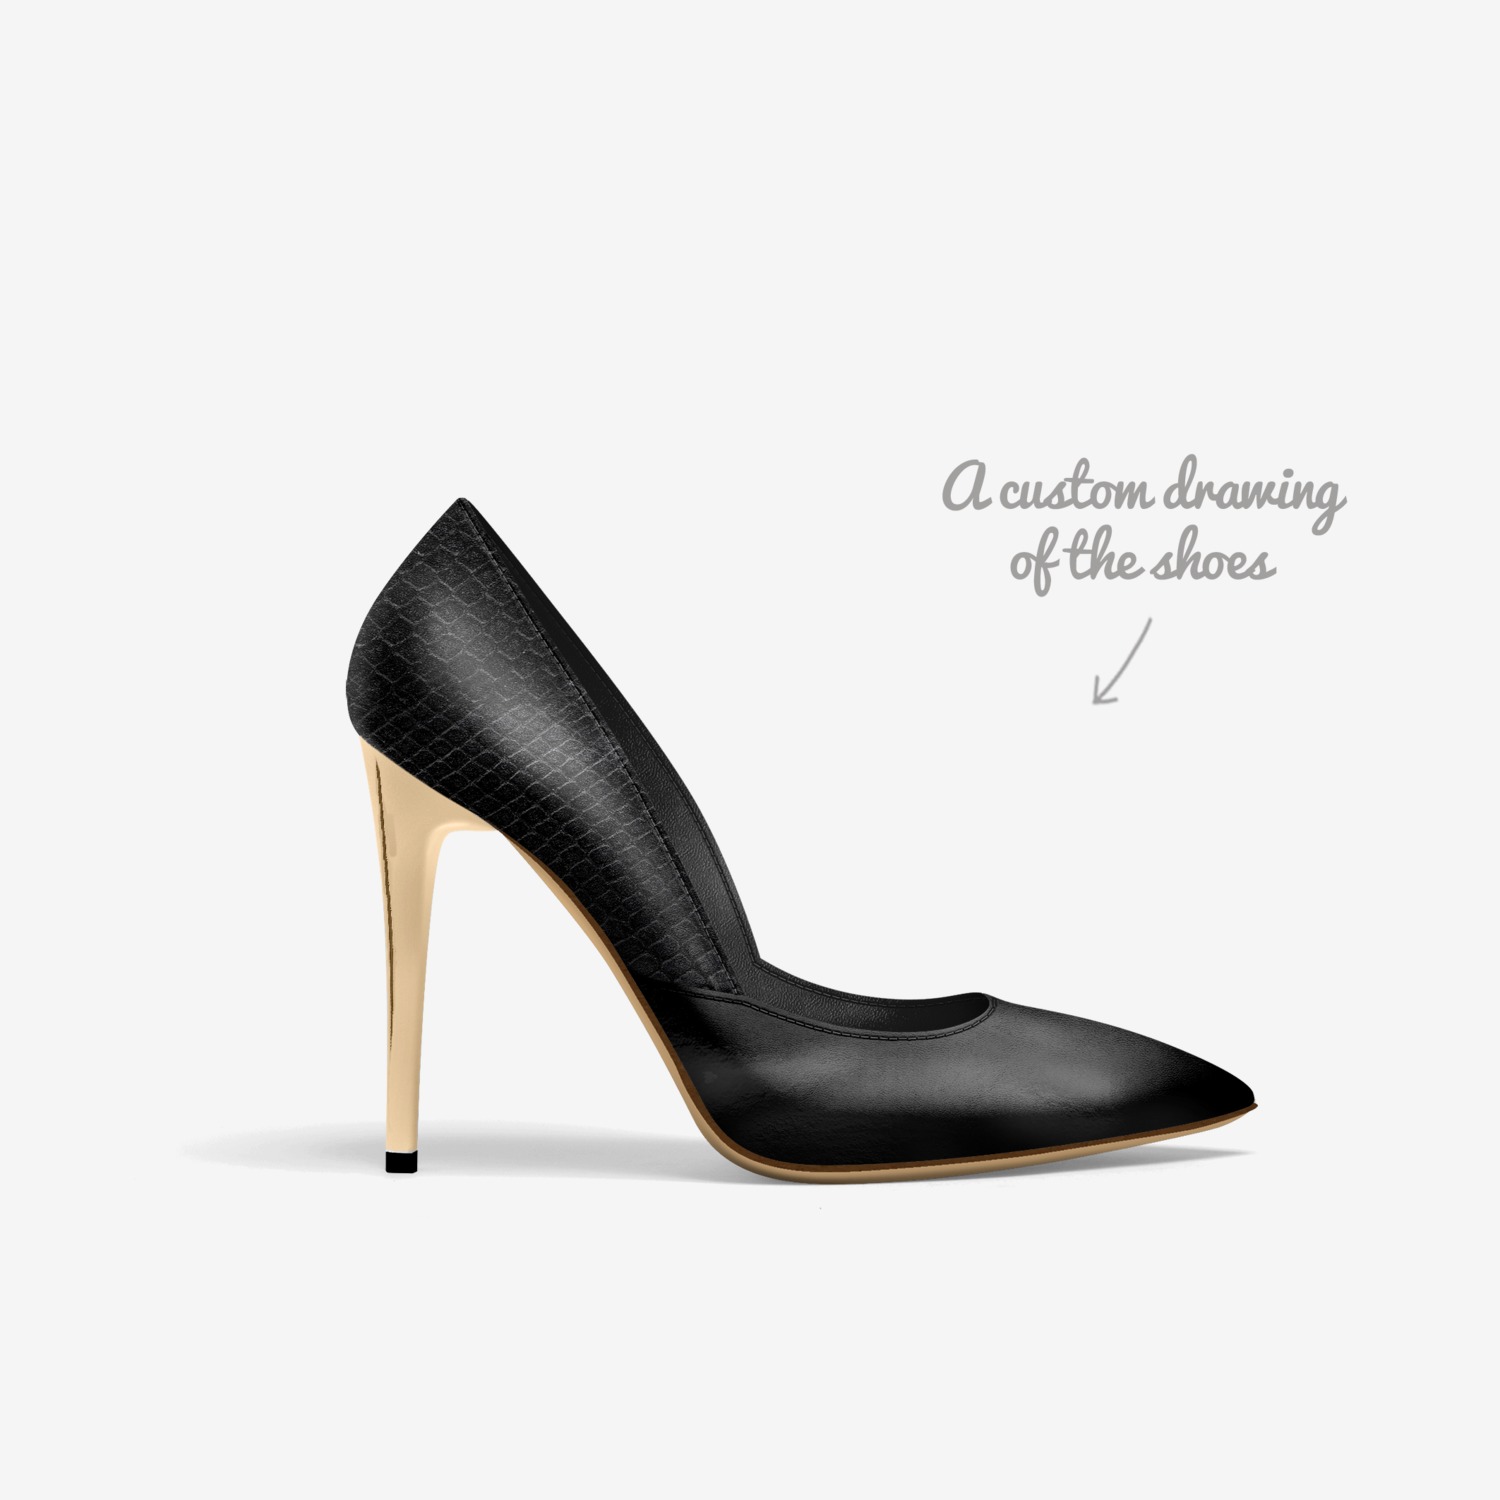 Hera  A Custom Shoe concept by Ahmed F M Hamdan